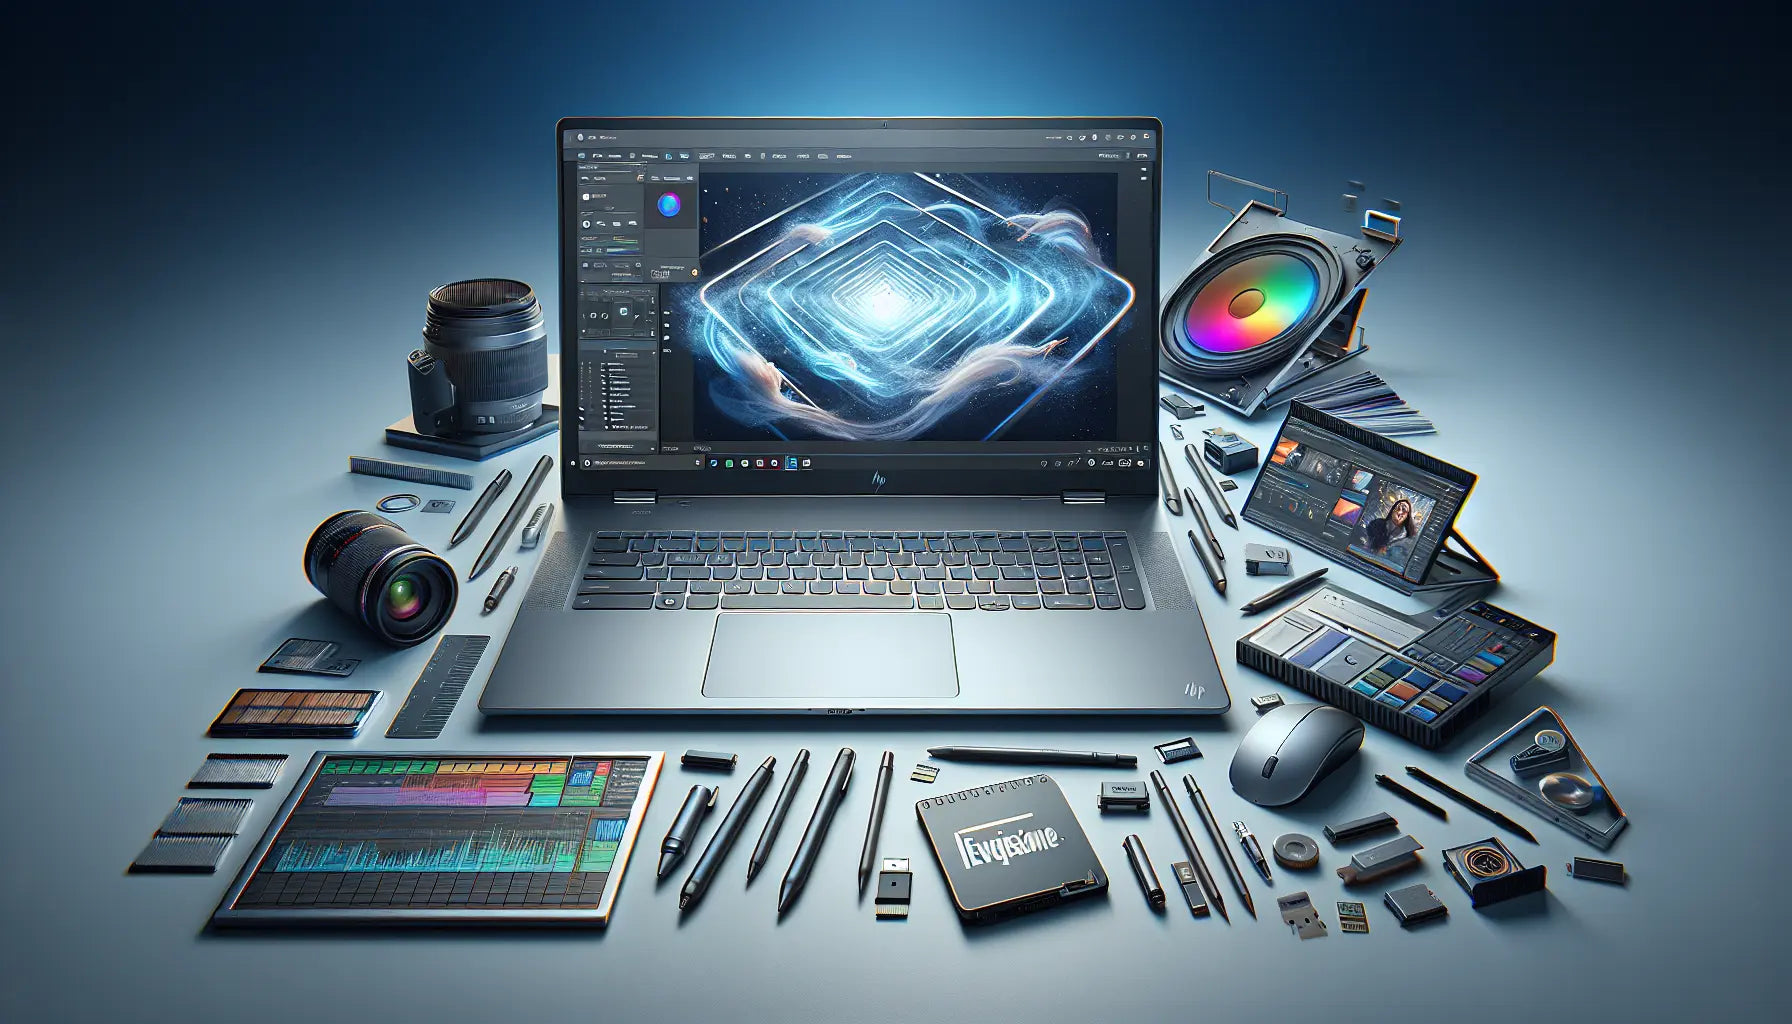 HP EliteBook 840 G3 I5, 6th Gen, 256GB, 8GB Ram- The Best Laptop for YouTubers